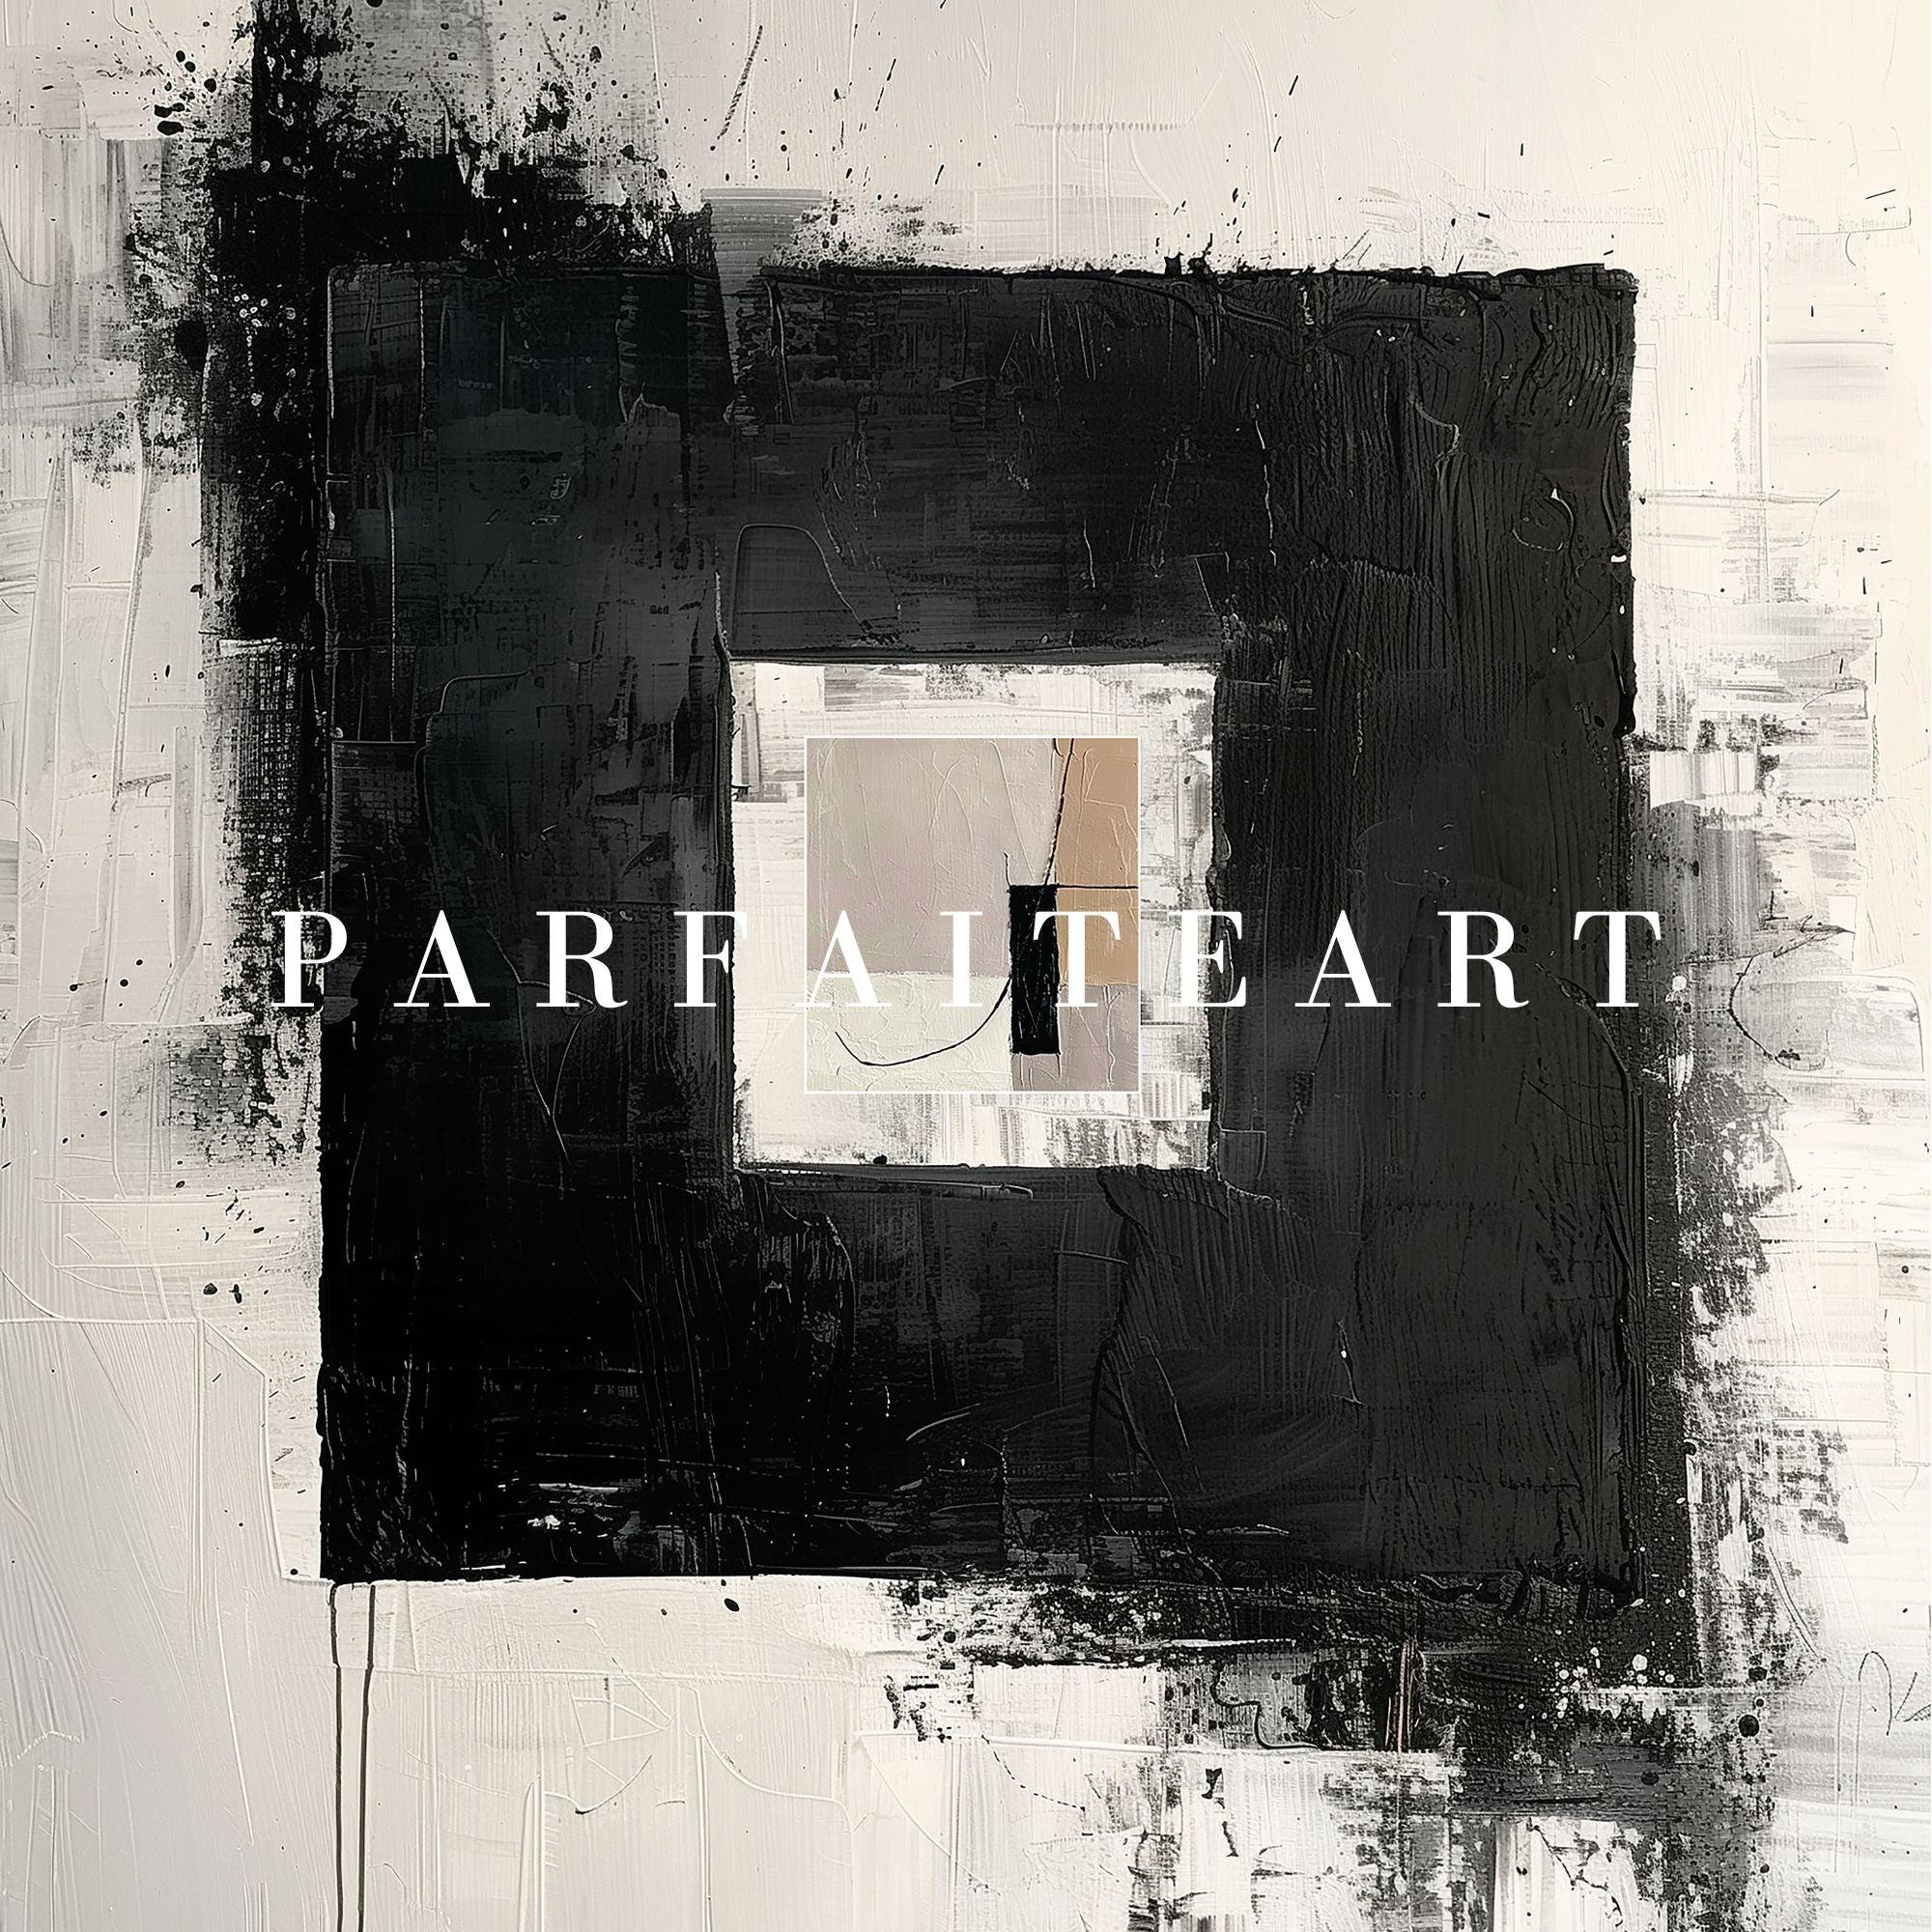 Abstract Art,Canvas Print Wall Art,Minimalist Black And White Color Block AC5 - ParfaiteArt